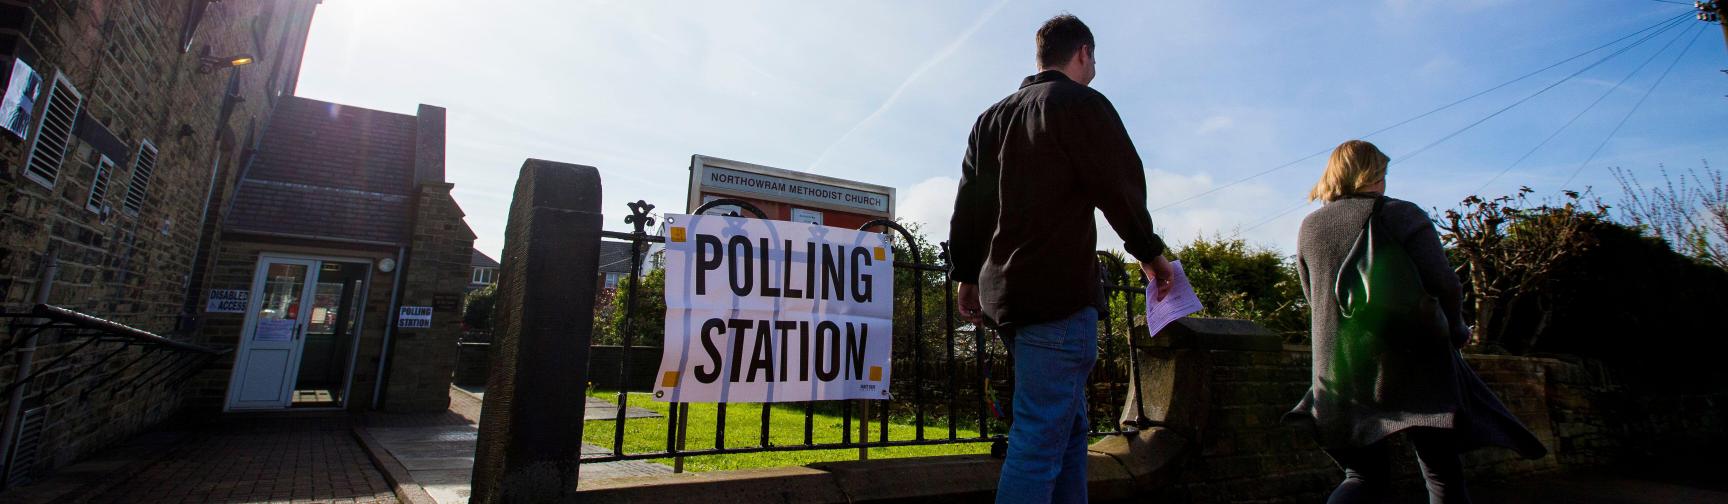 Polling station, West Yorkshire